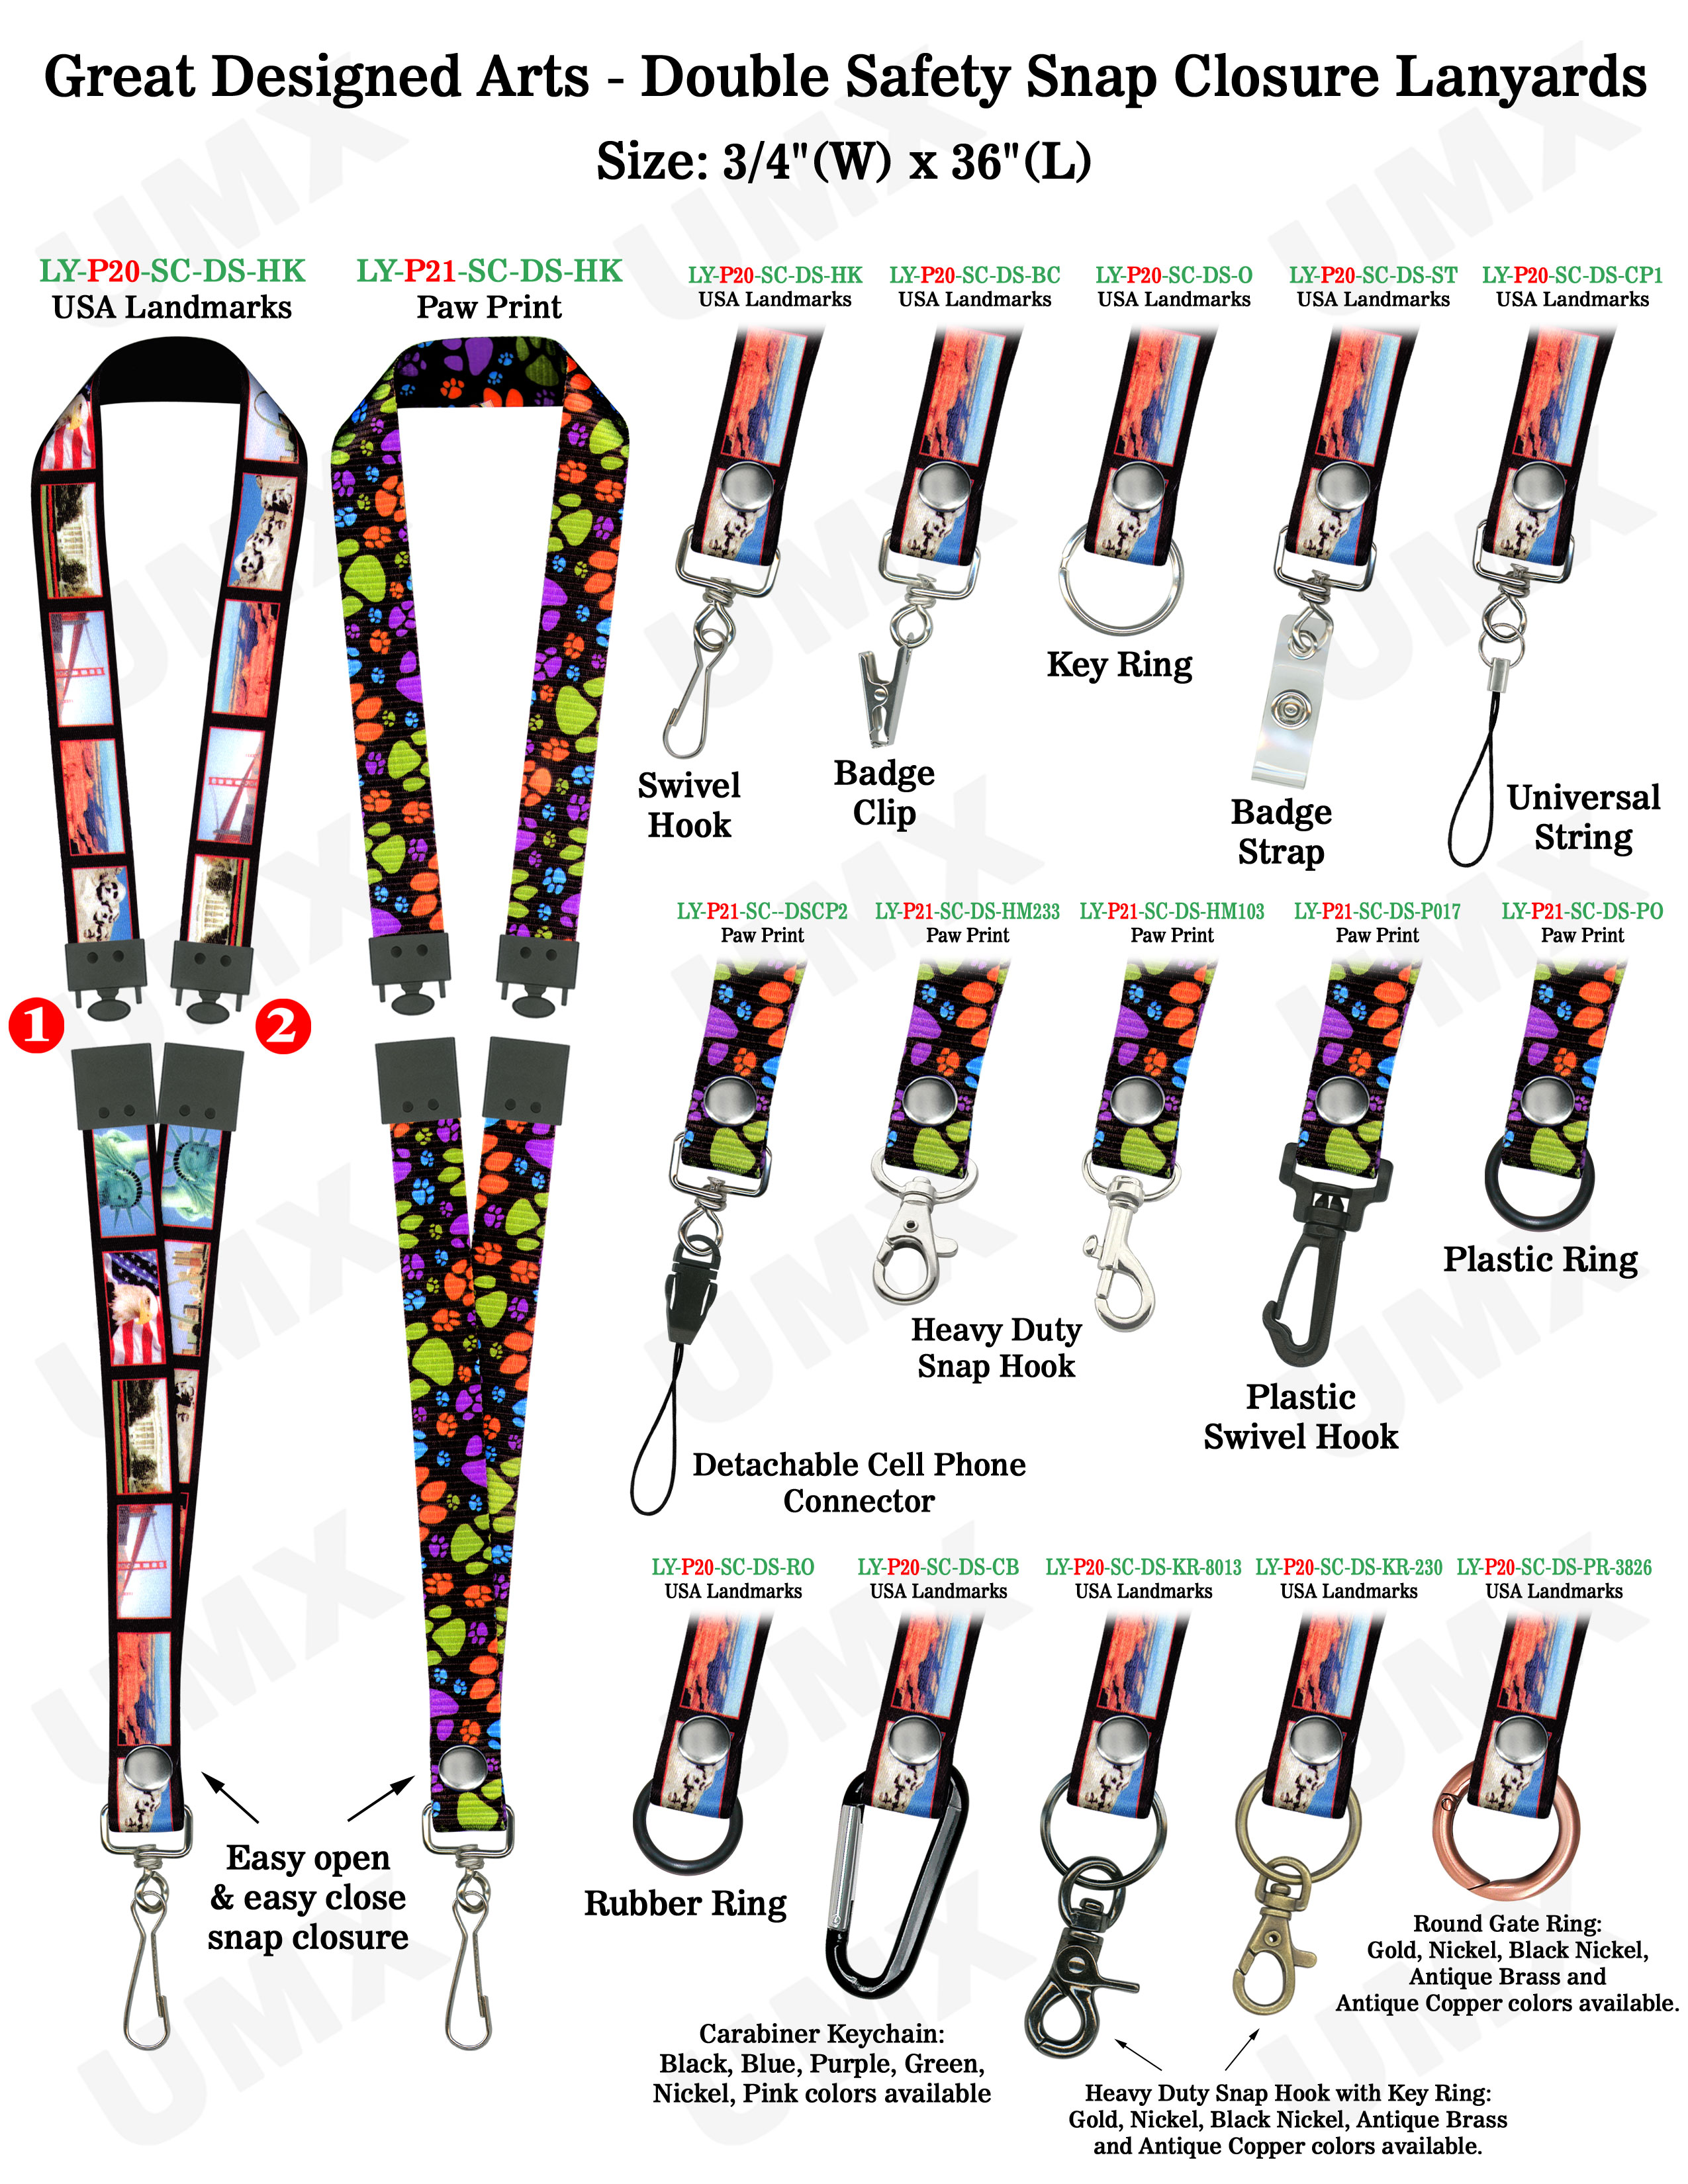 Secured Badge Lanyards: 3/4" Pattern Printed Security Badges, Neck Straps